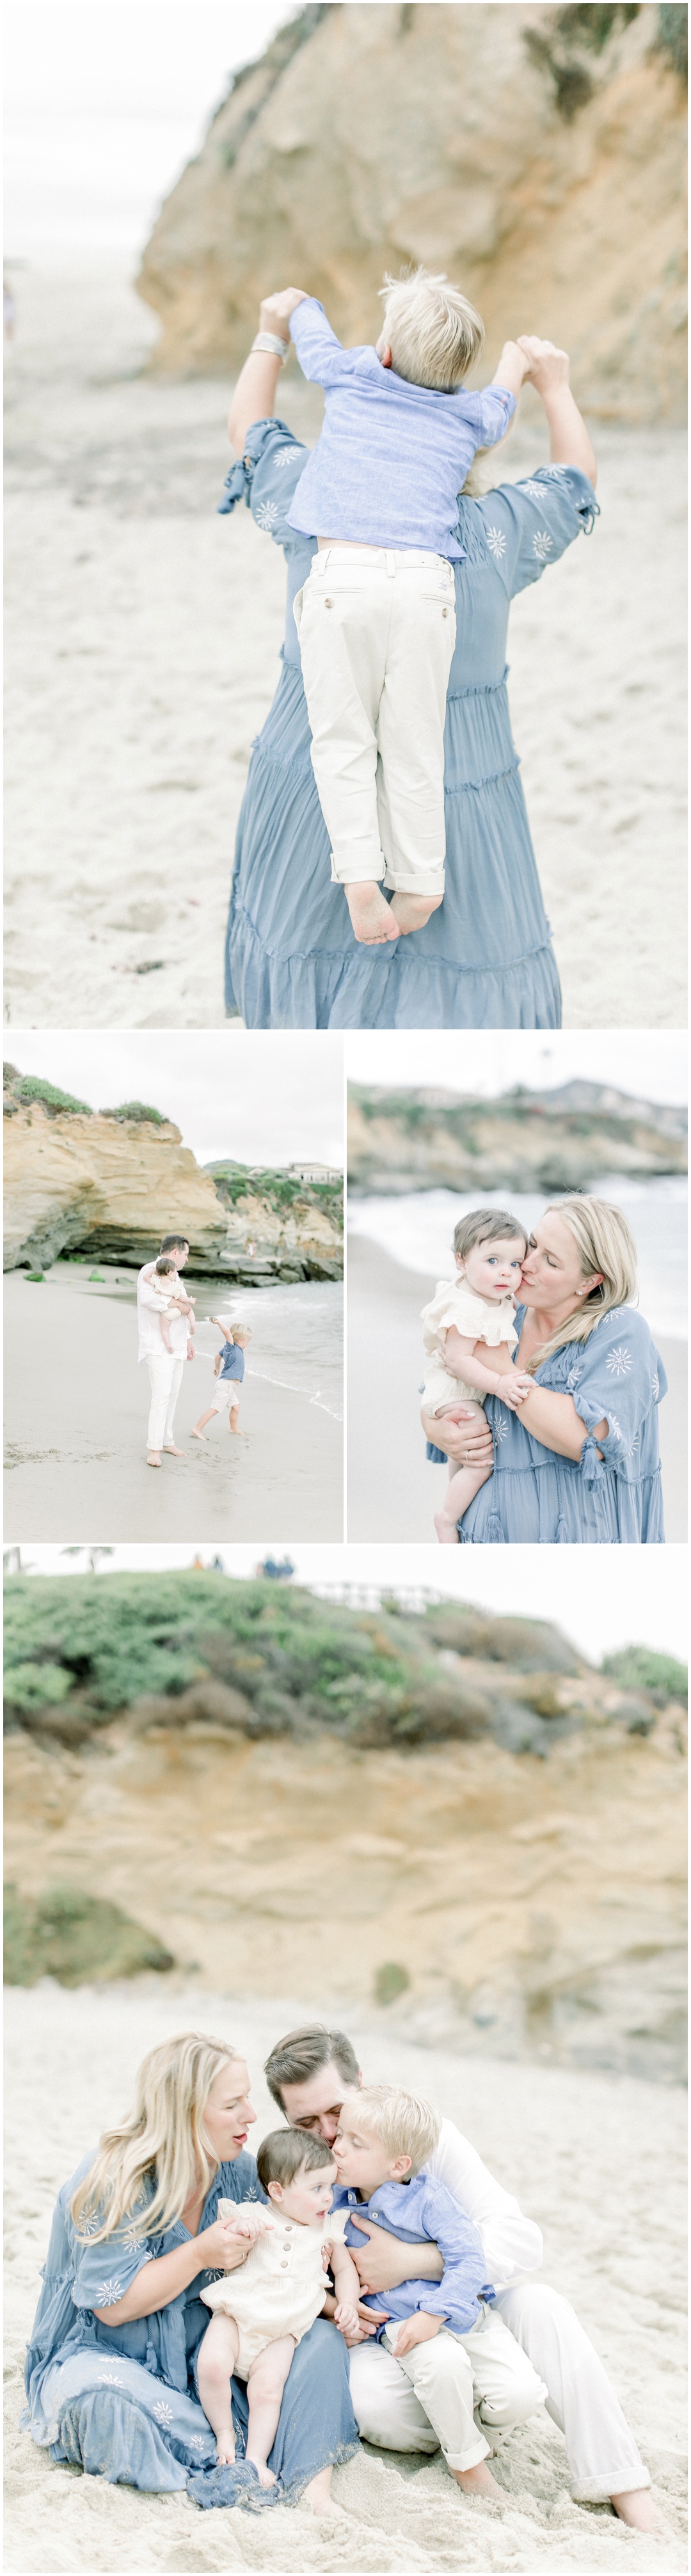 Newport+Beach+Newborn+Photographer+Orange+County+Family+Photographer+Cori+Kleckner+Photography+The+McClure+Family+Gracie+McClure_4384.jpg